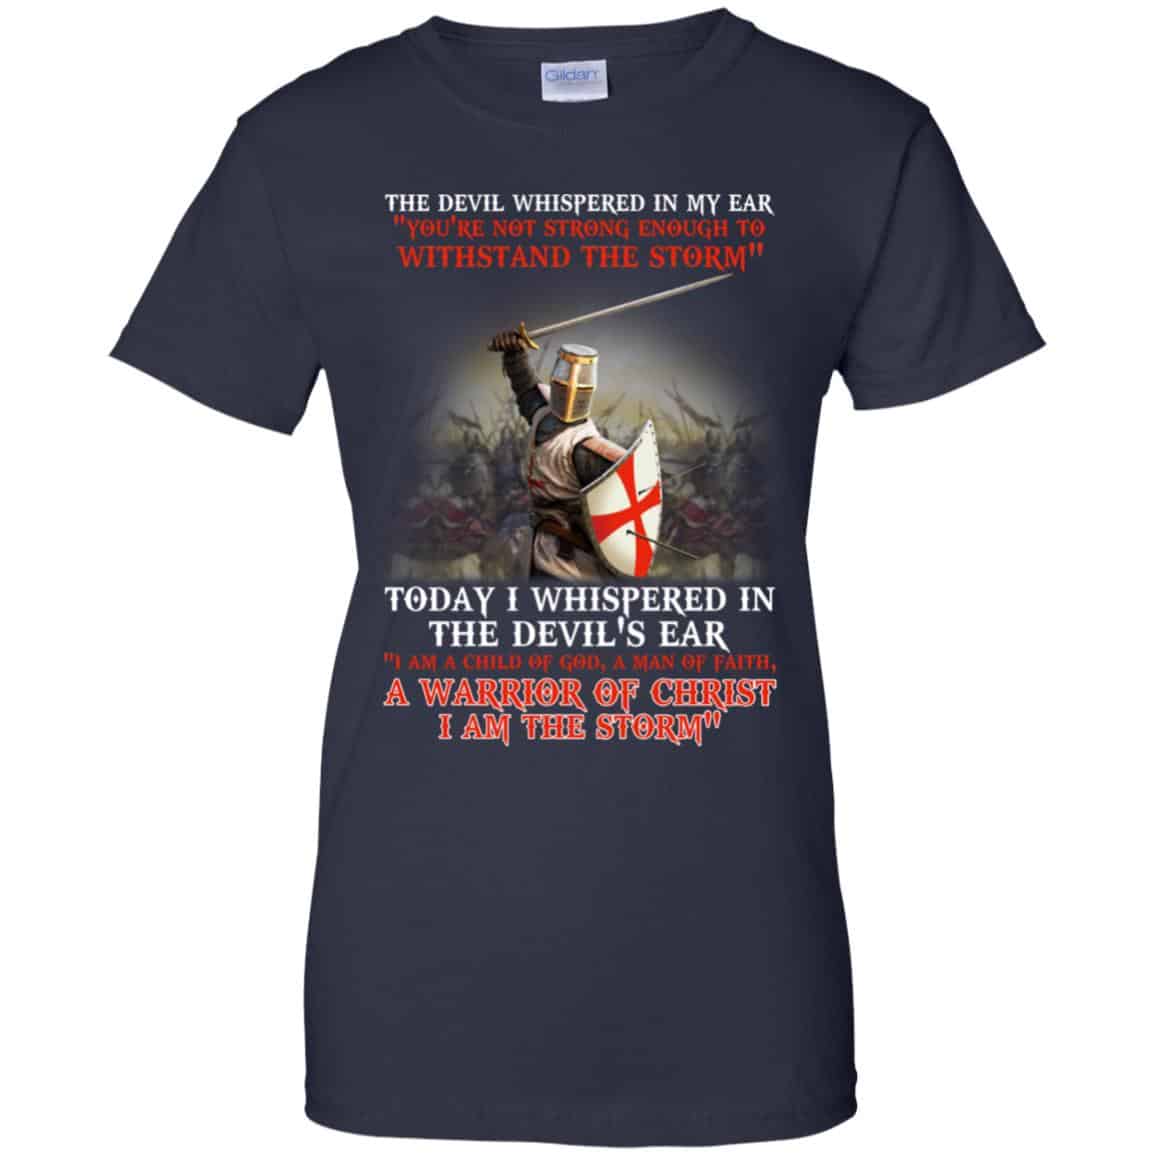 Knight Templar I Am A Child Of God A Warrior Of Christ T-Shirt Size S-5XL